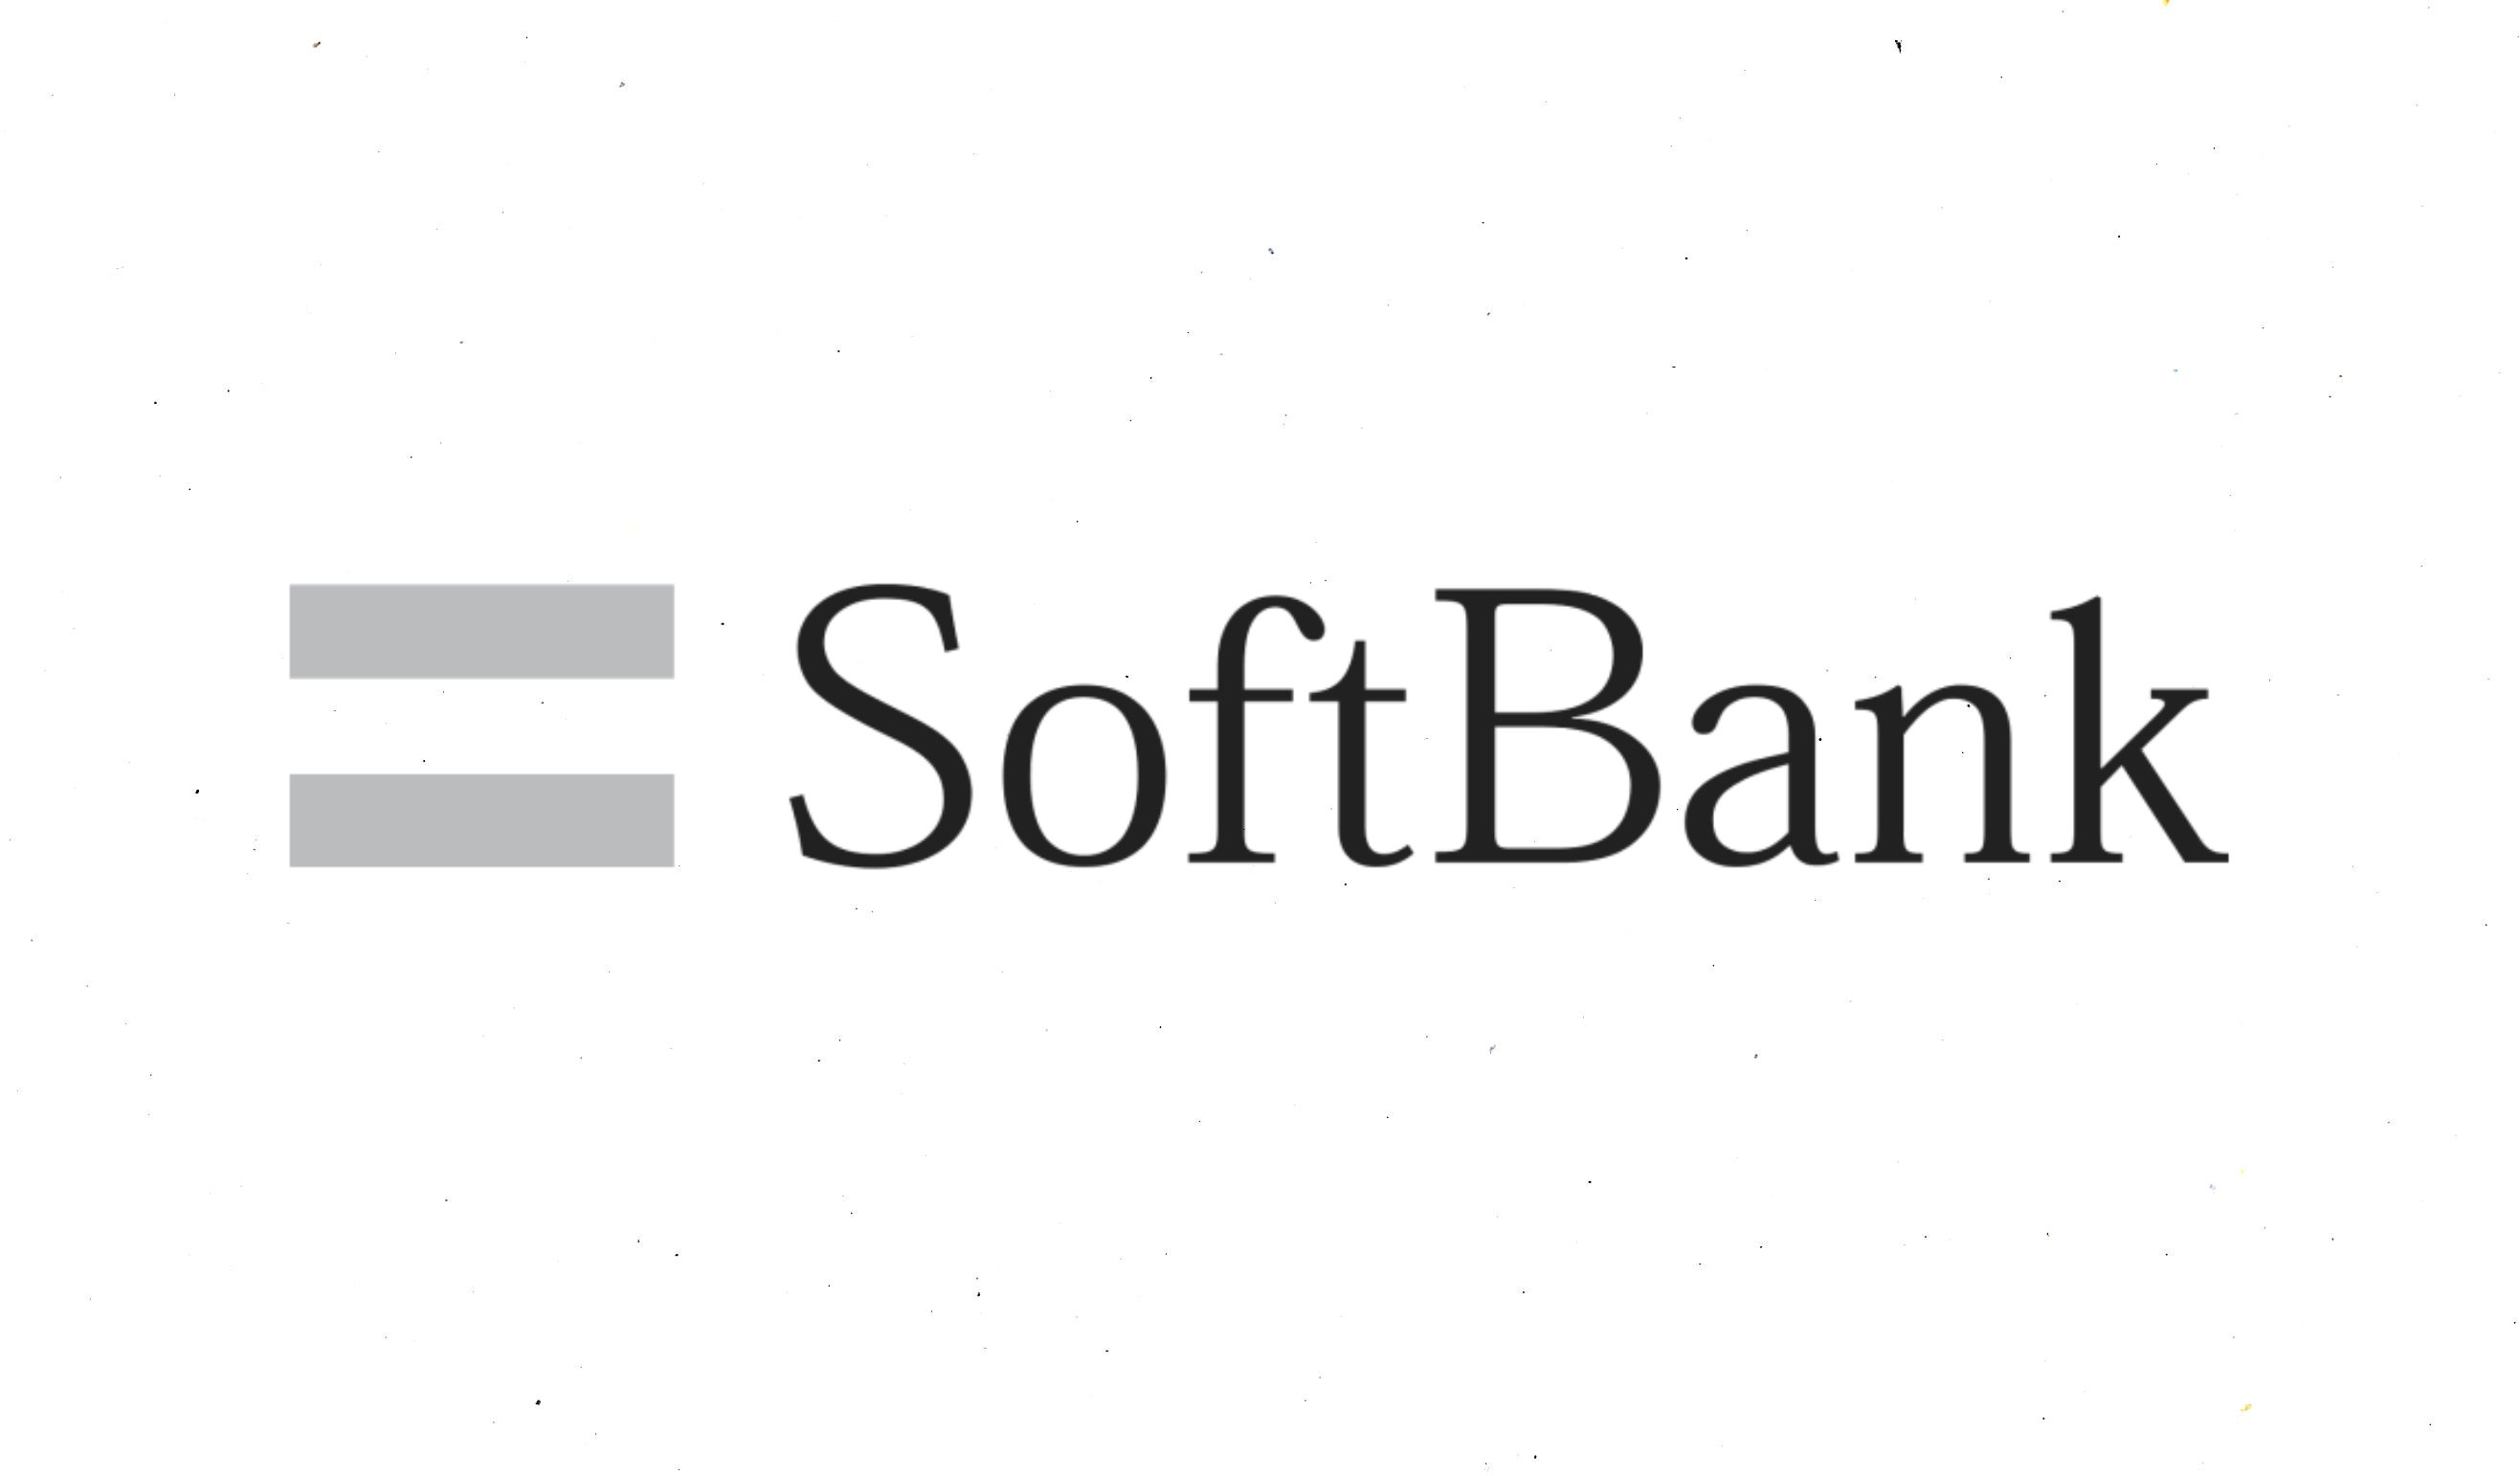 SoftBank led $19.5 million funding round in Splyt